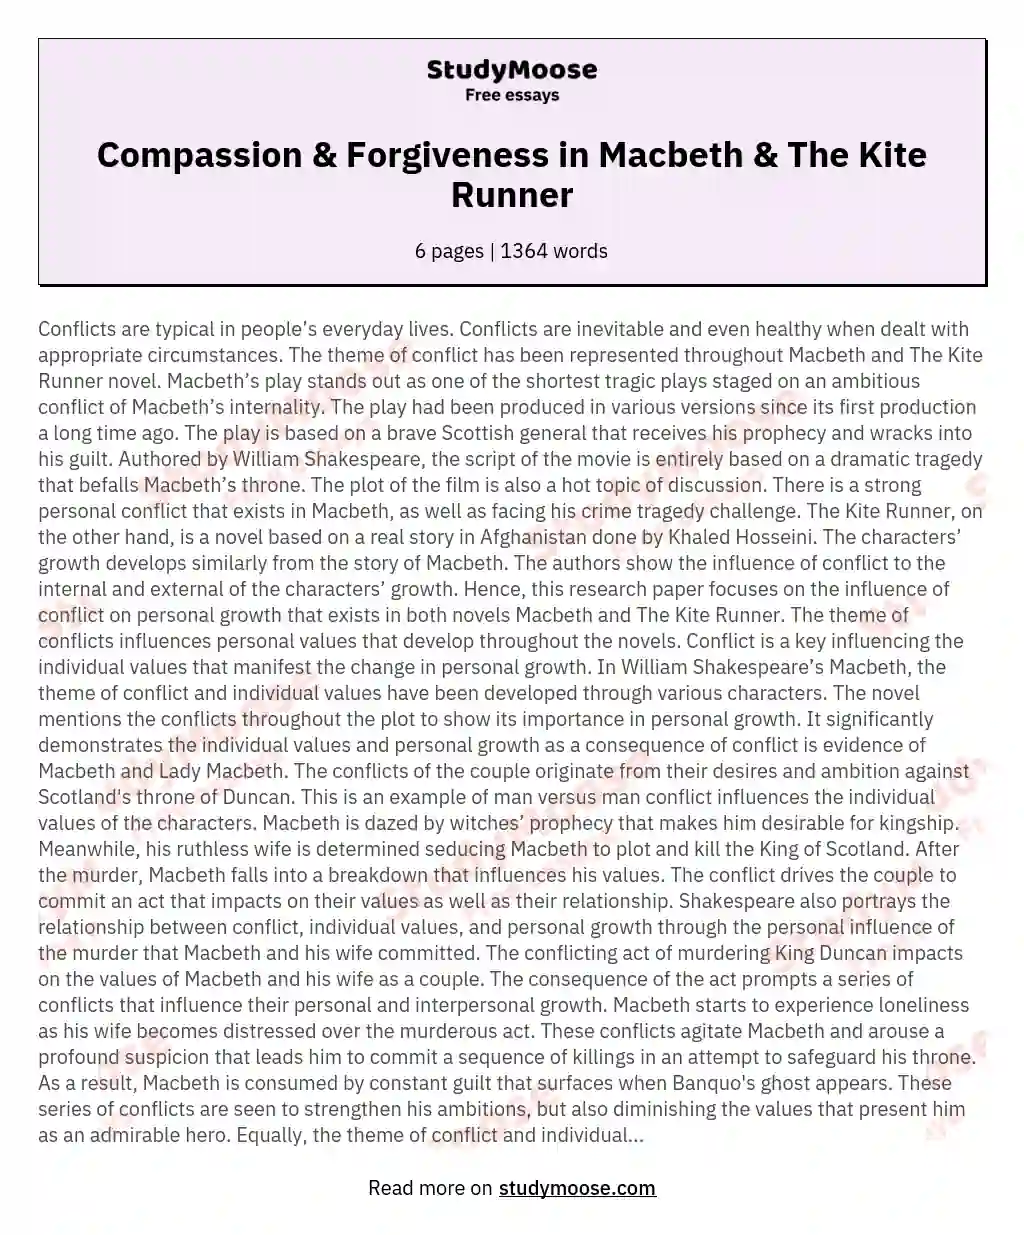 Compassion & Forgiveness in Macbeth & The Kite Runner